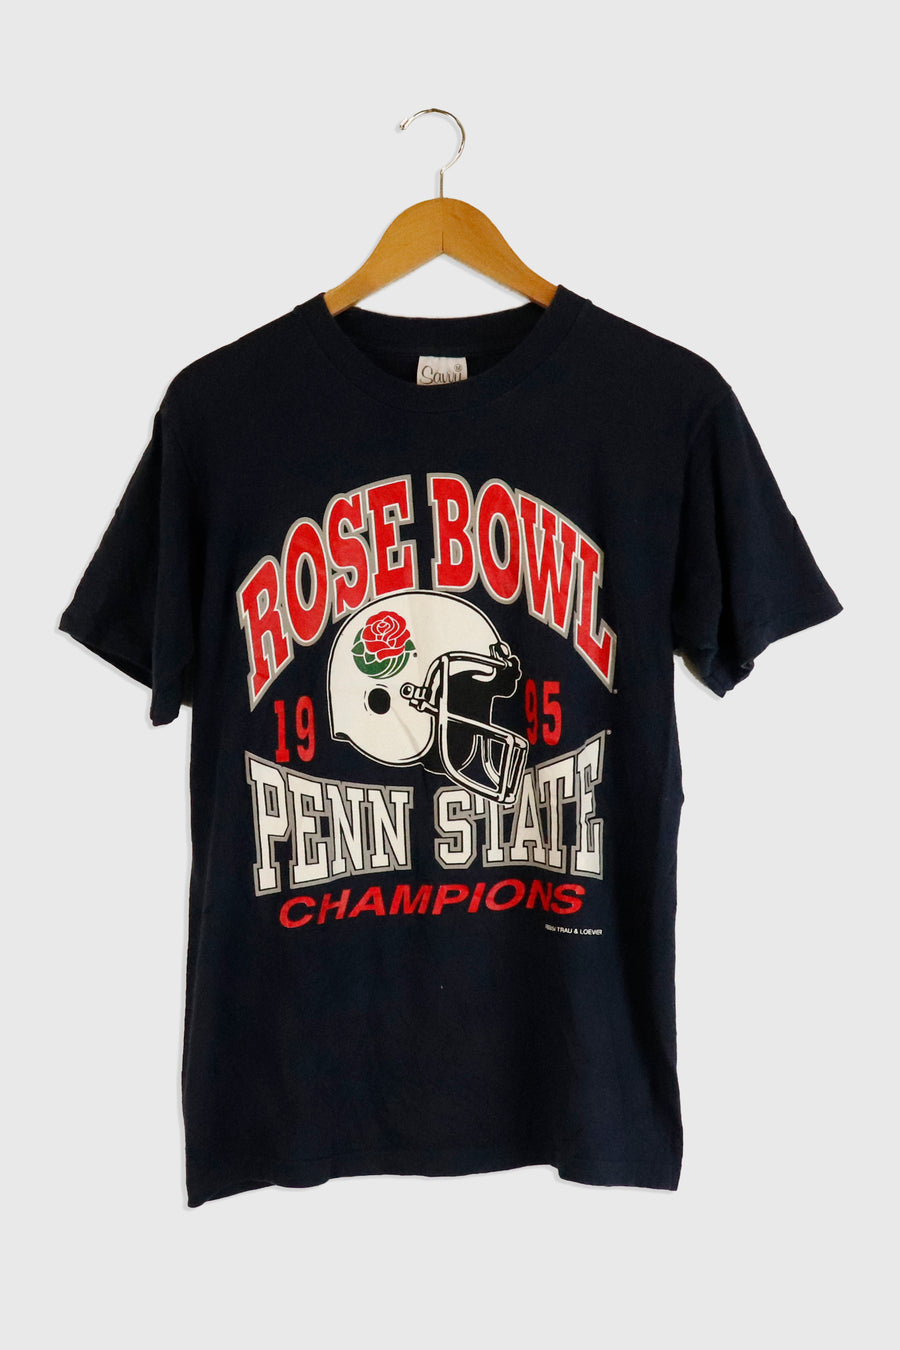 Vintage 1995 Rose Bowl Penn State Camps T Shirt Sz M